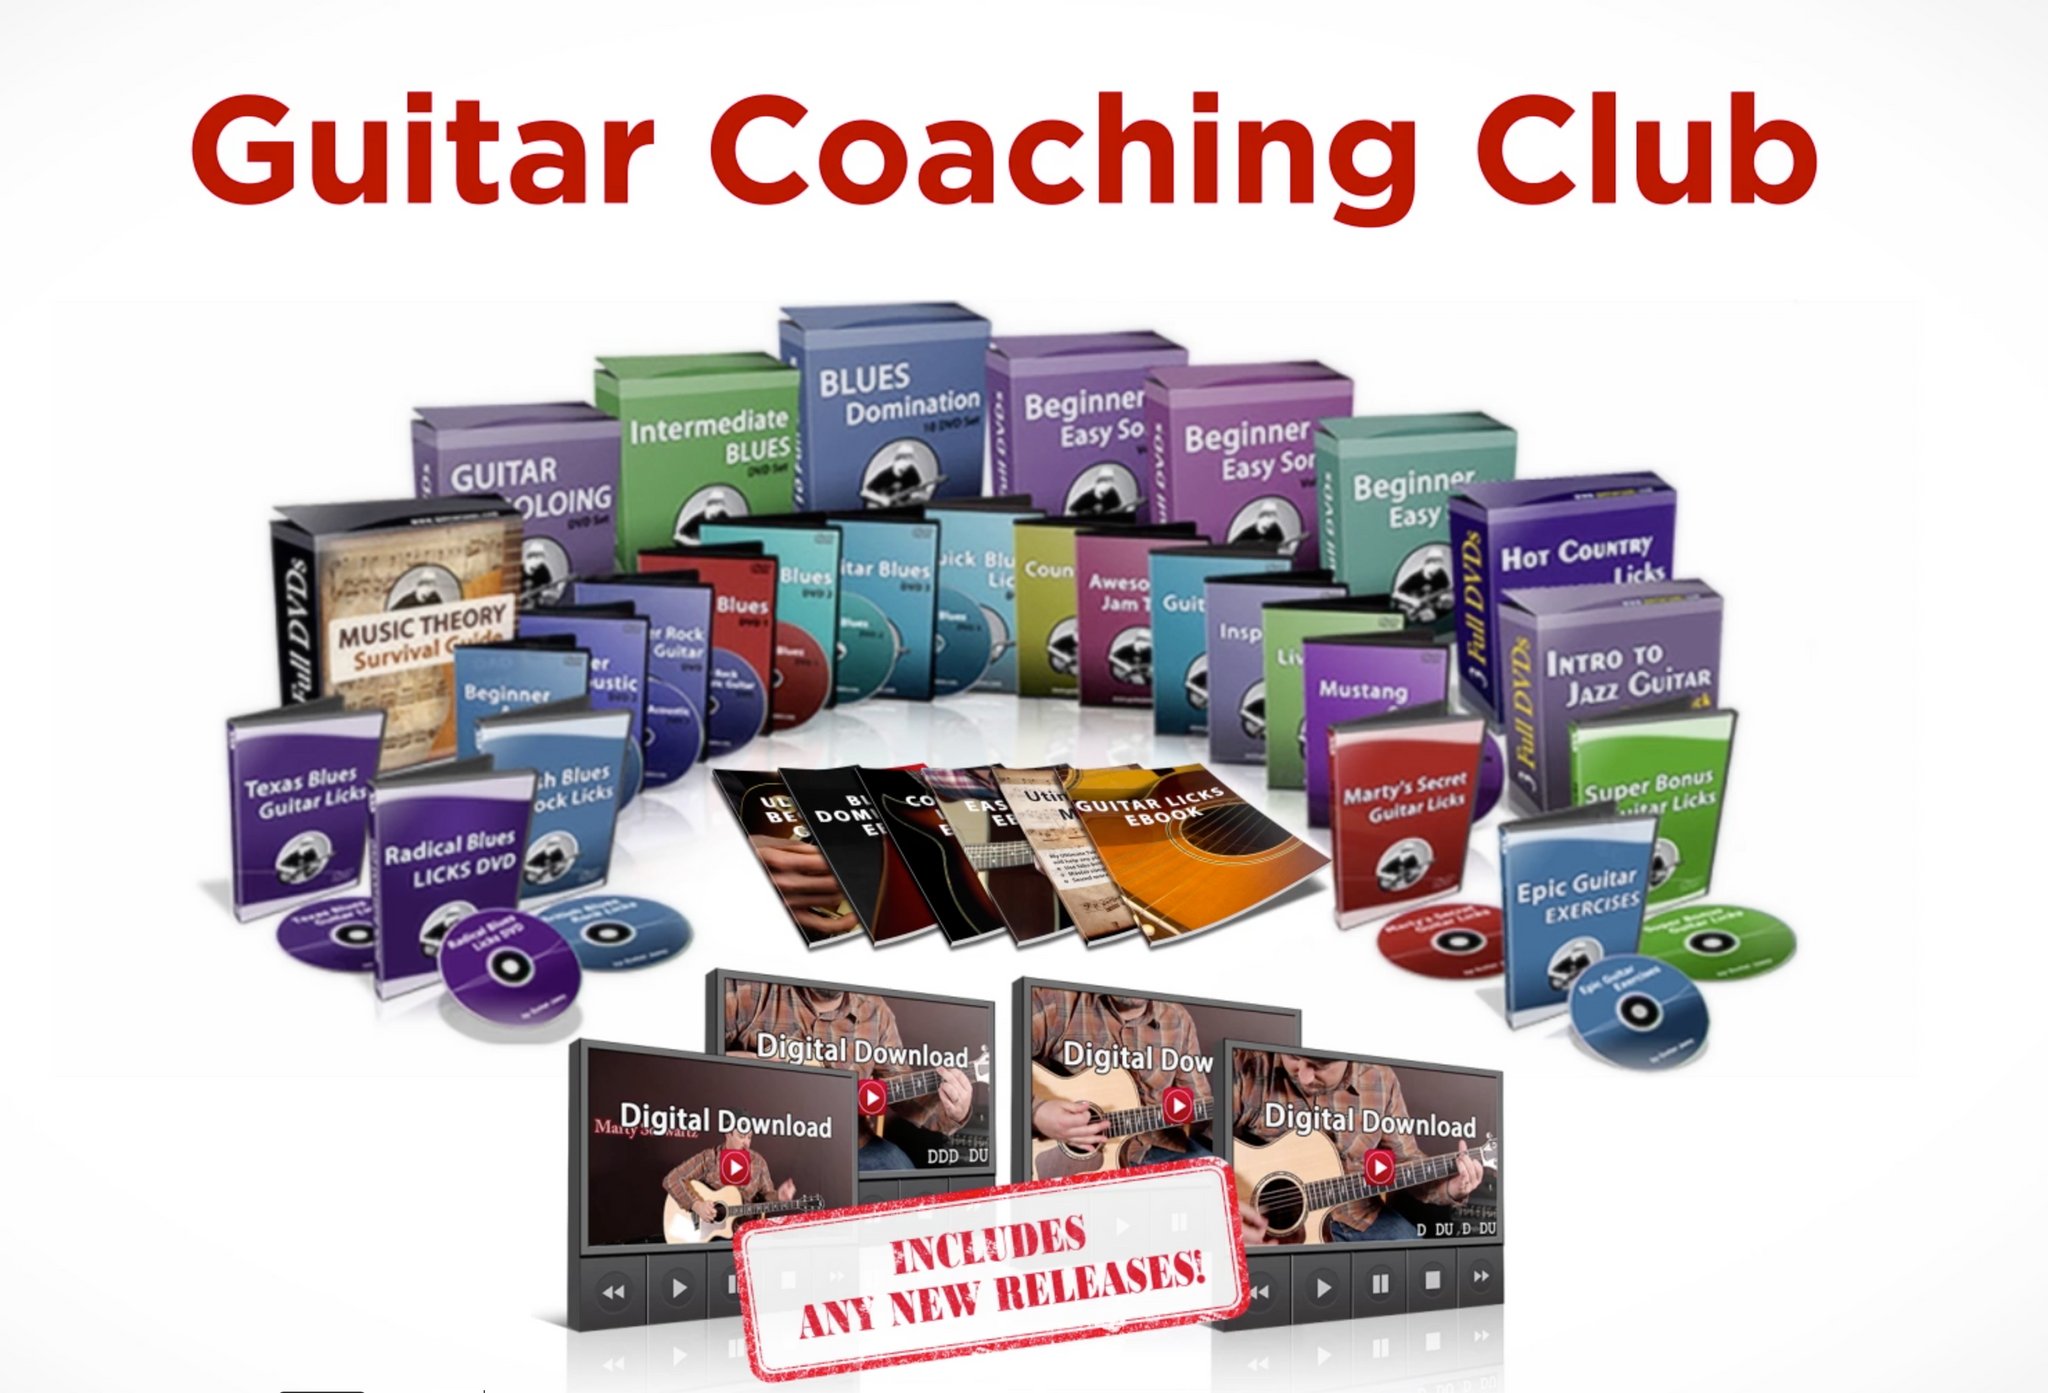 LIFETIME Membership to Guitar Coaching Club - You get EVERYTHING!